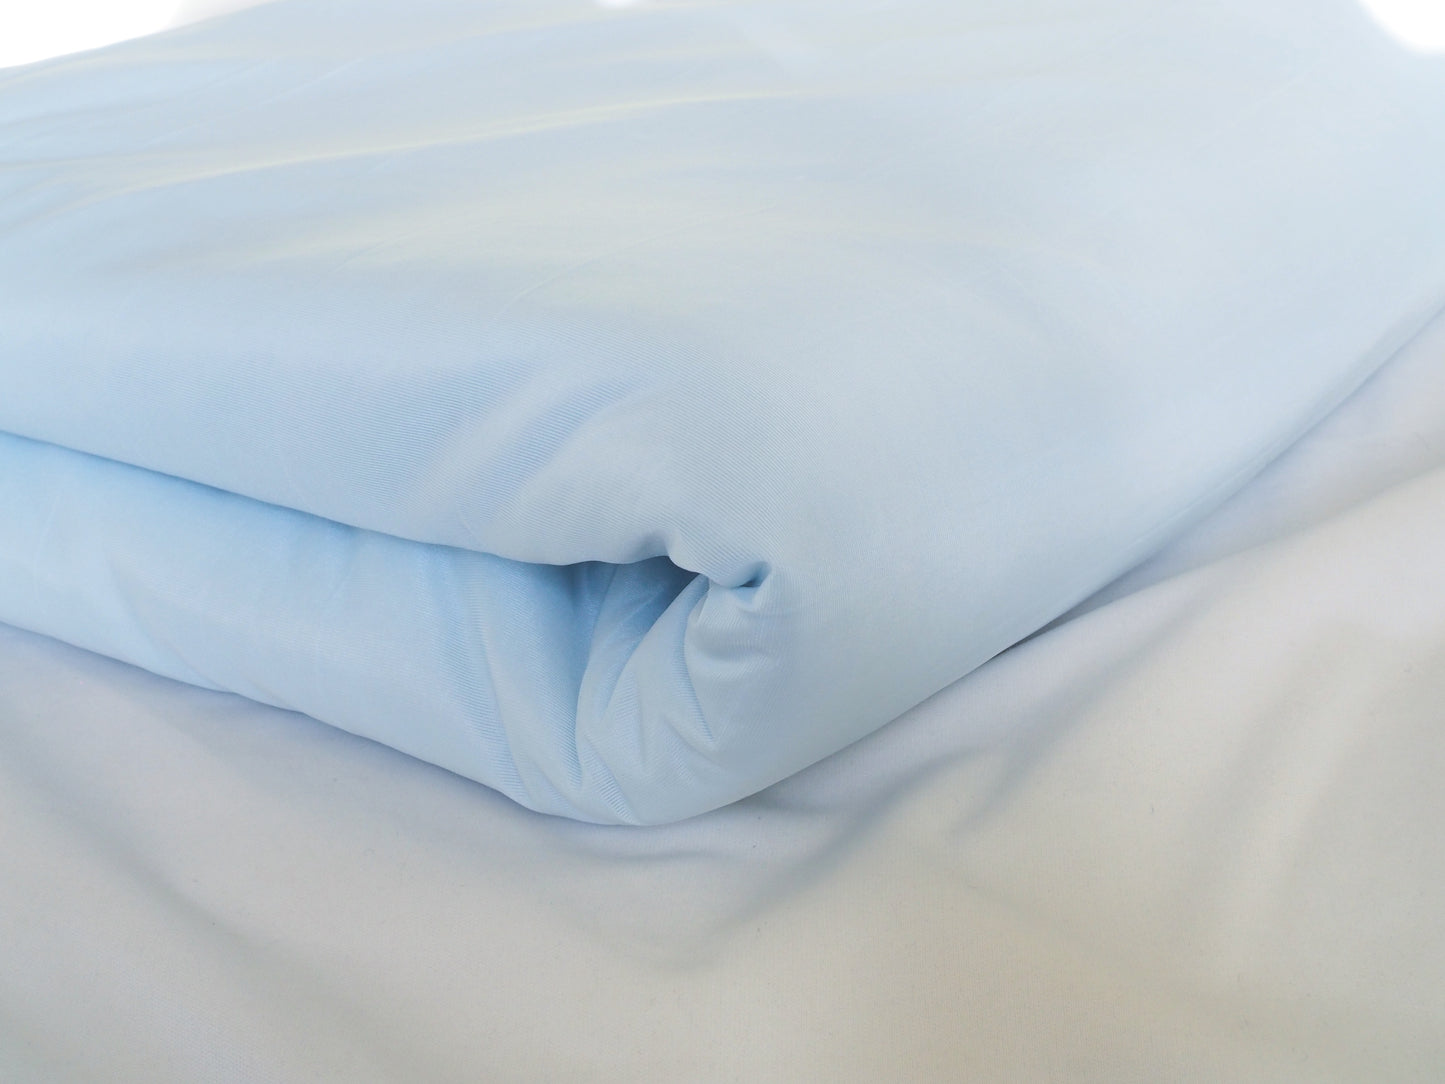 Breezy Sleep | The Original Cooling Blanket - Coolest Sleep For Hot Sleepers